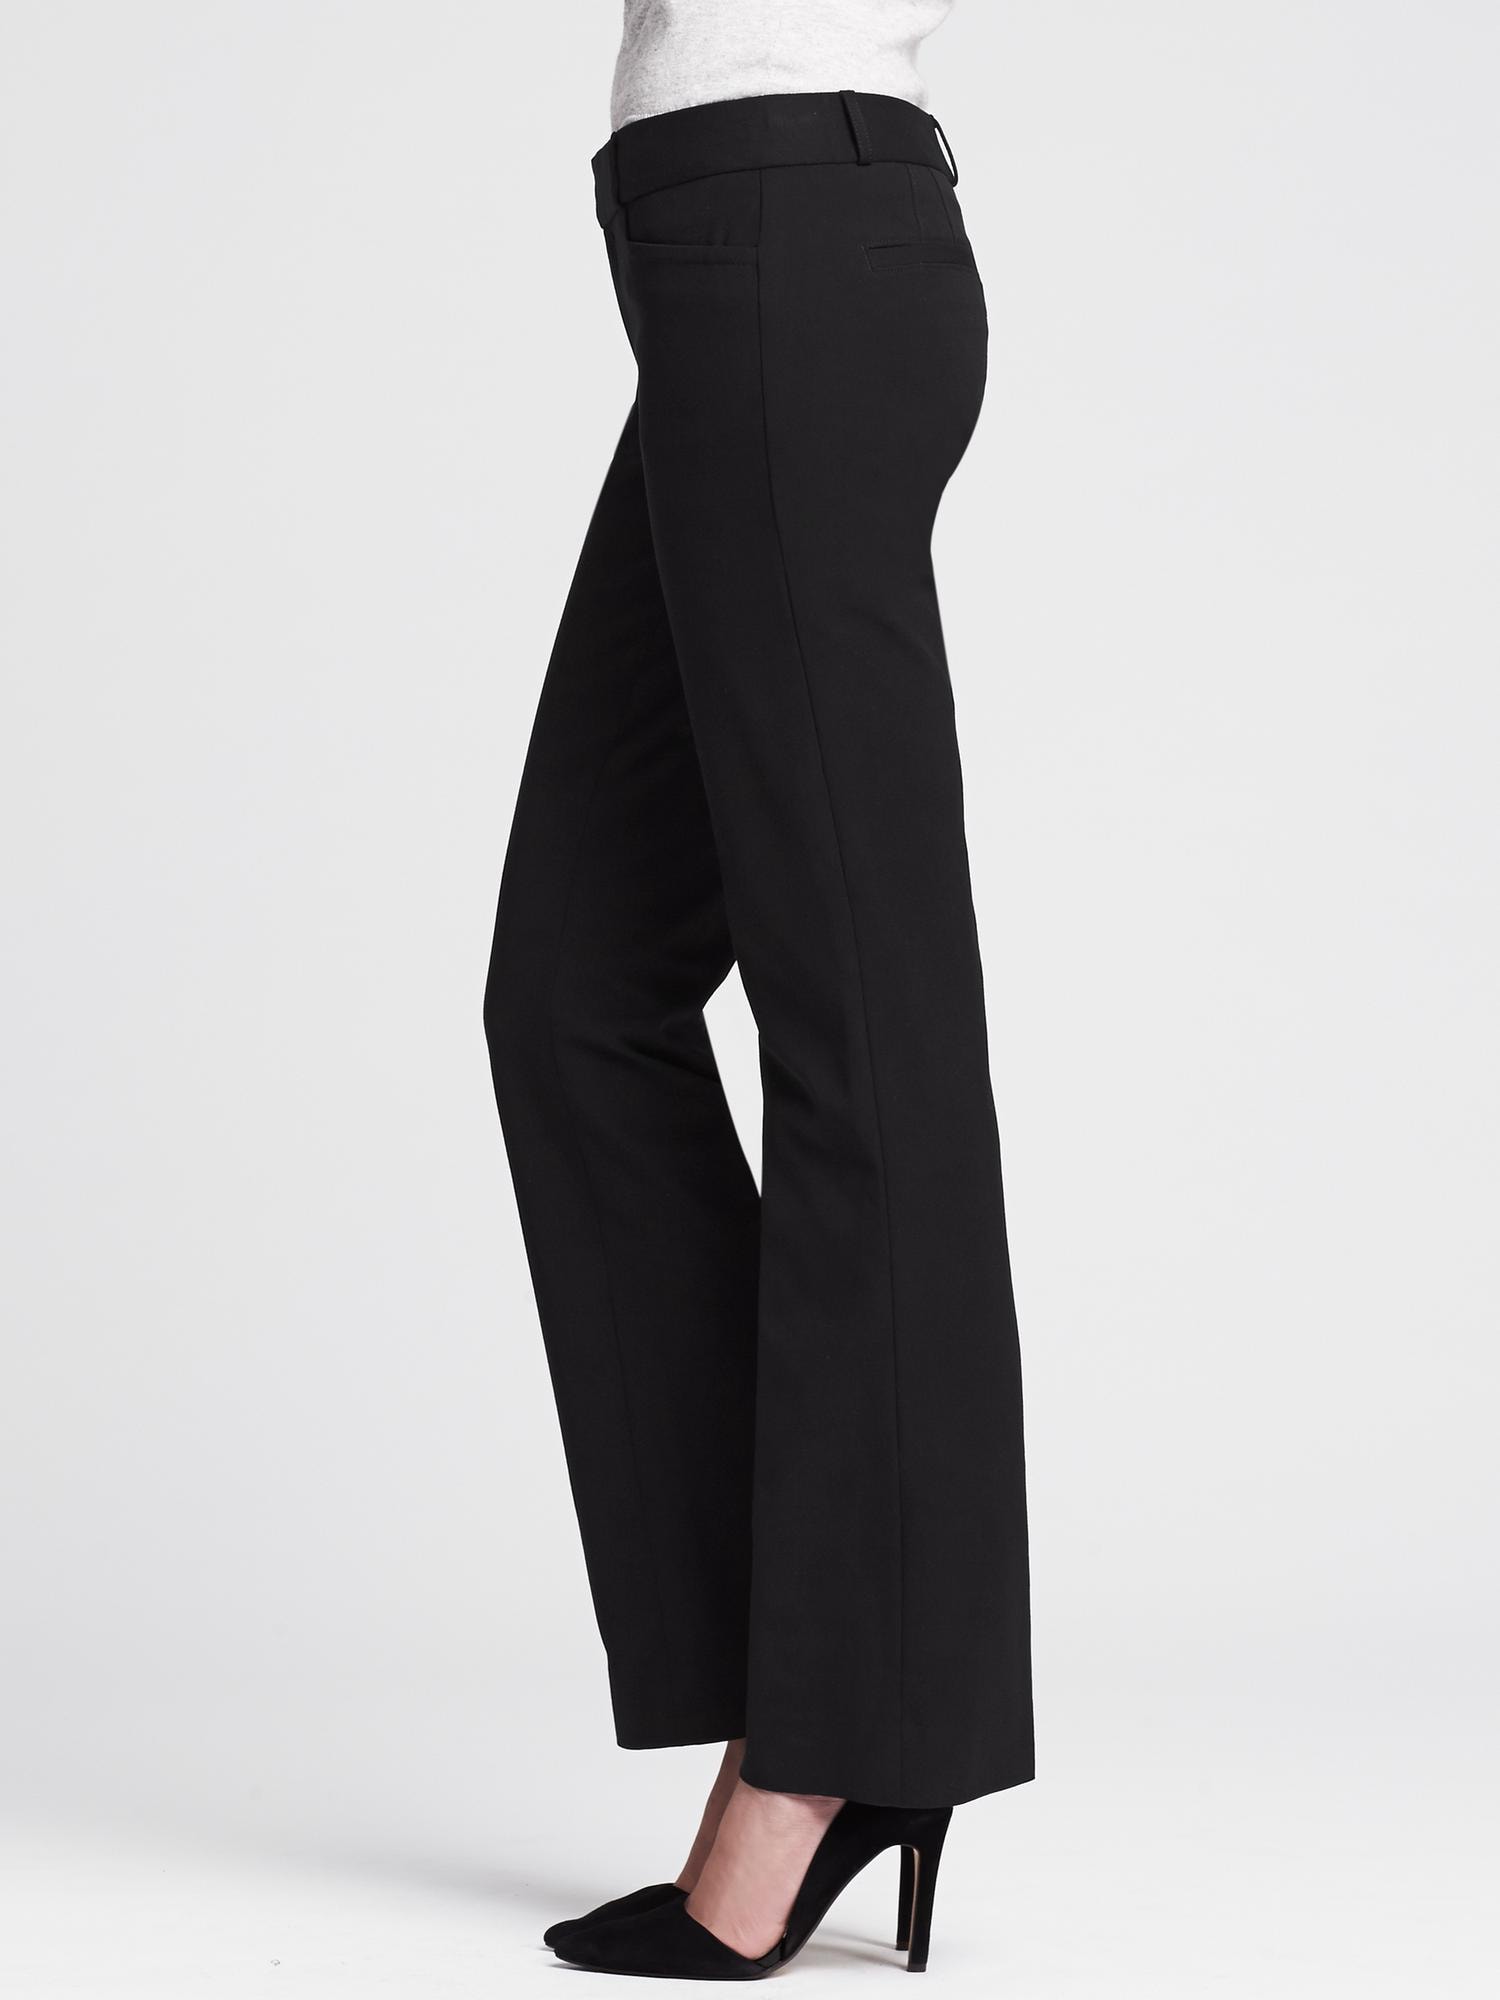 Banana Republic Black Sloan Fit Dress Pants Size 2/26 - Helia Beer Co